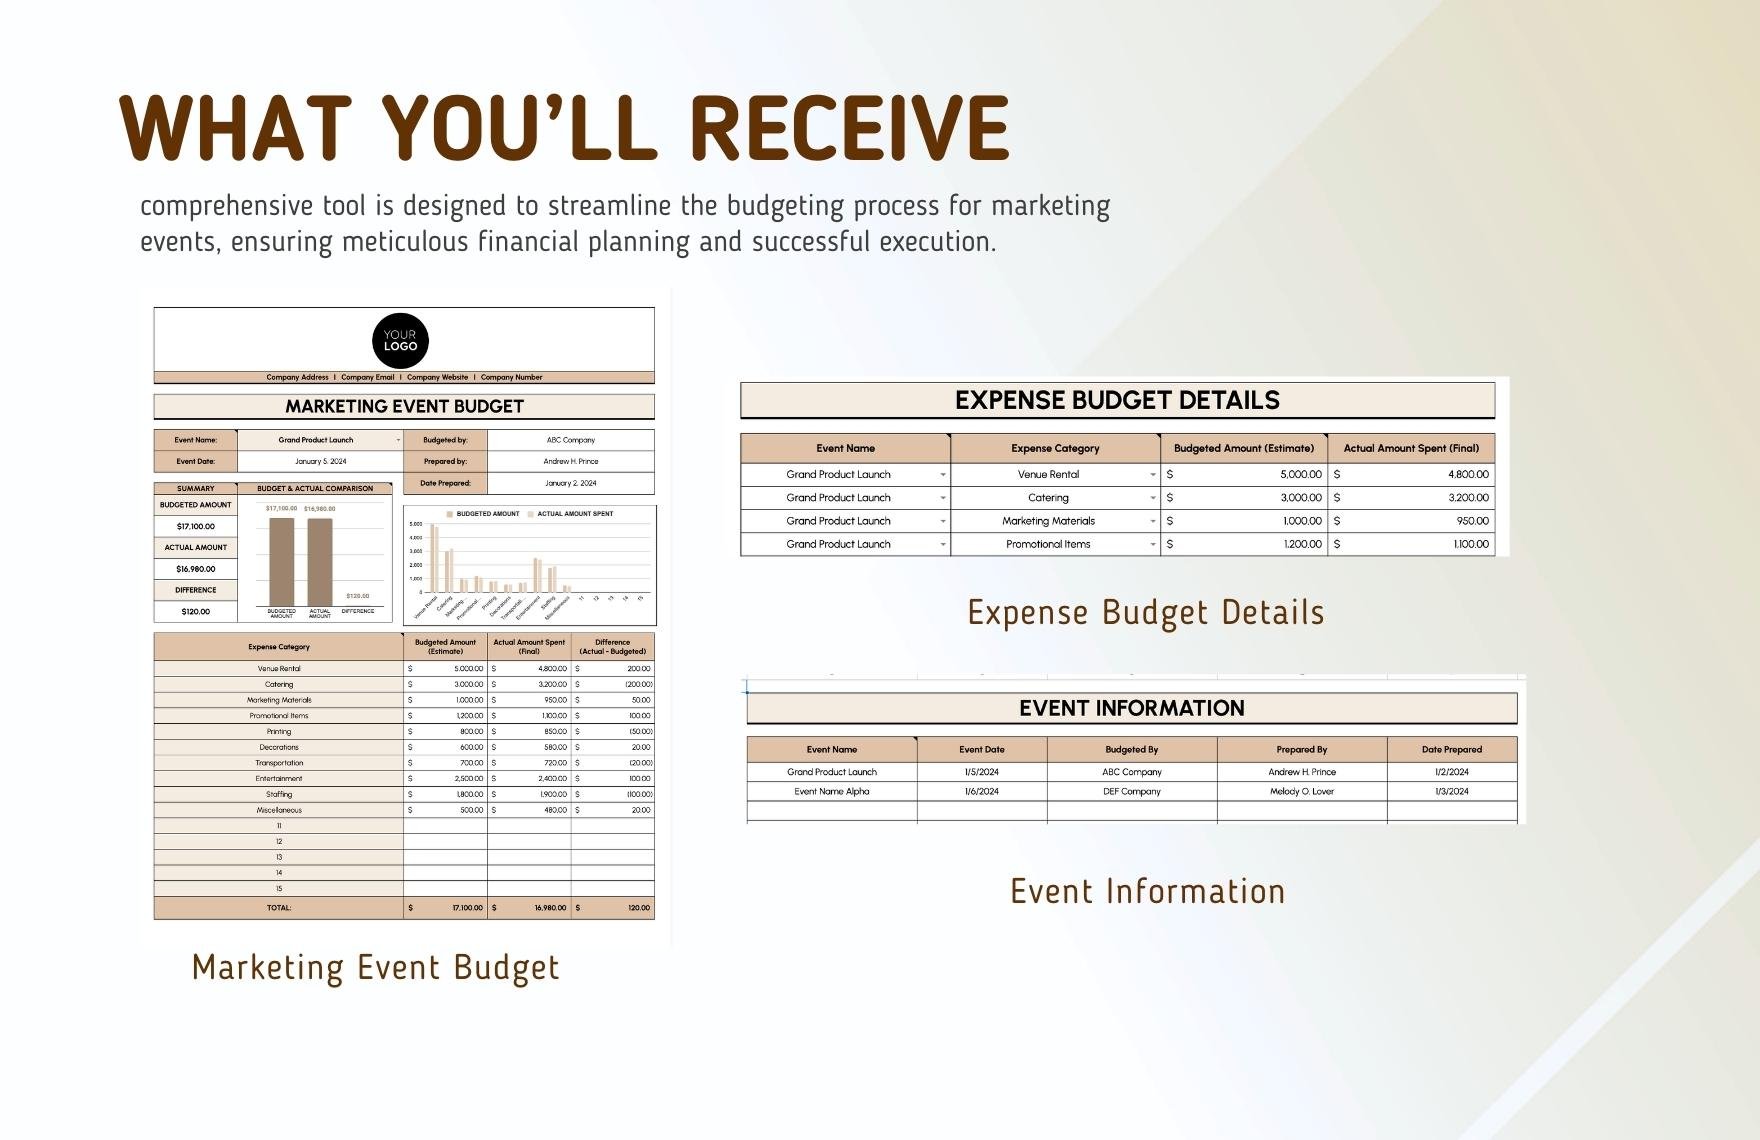 Marketing Event Budget Template